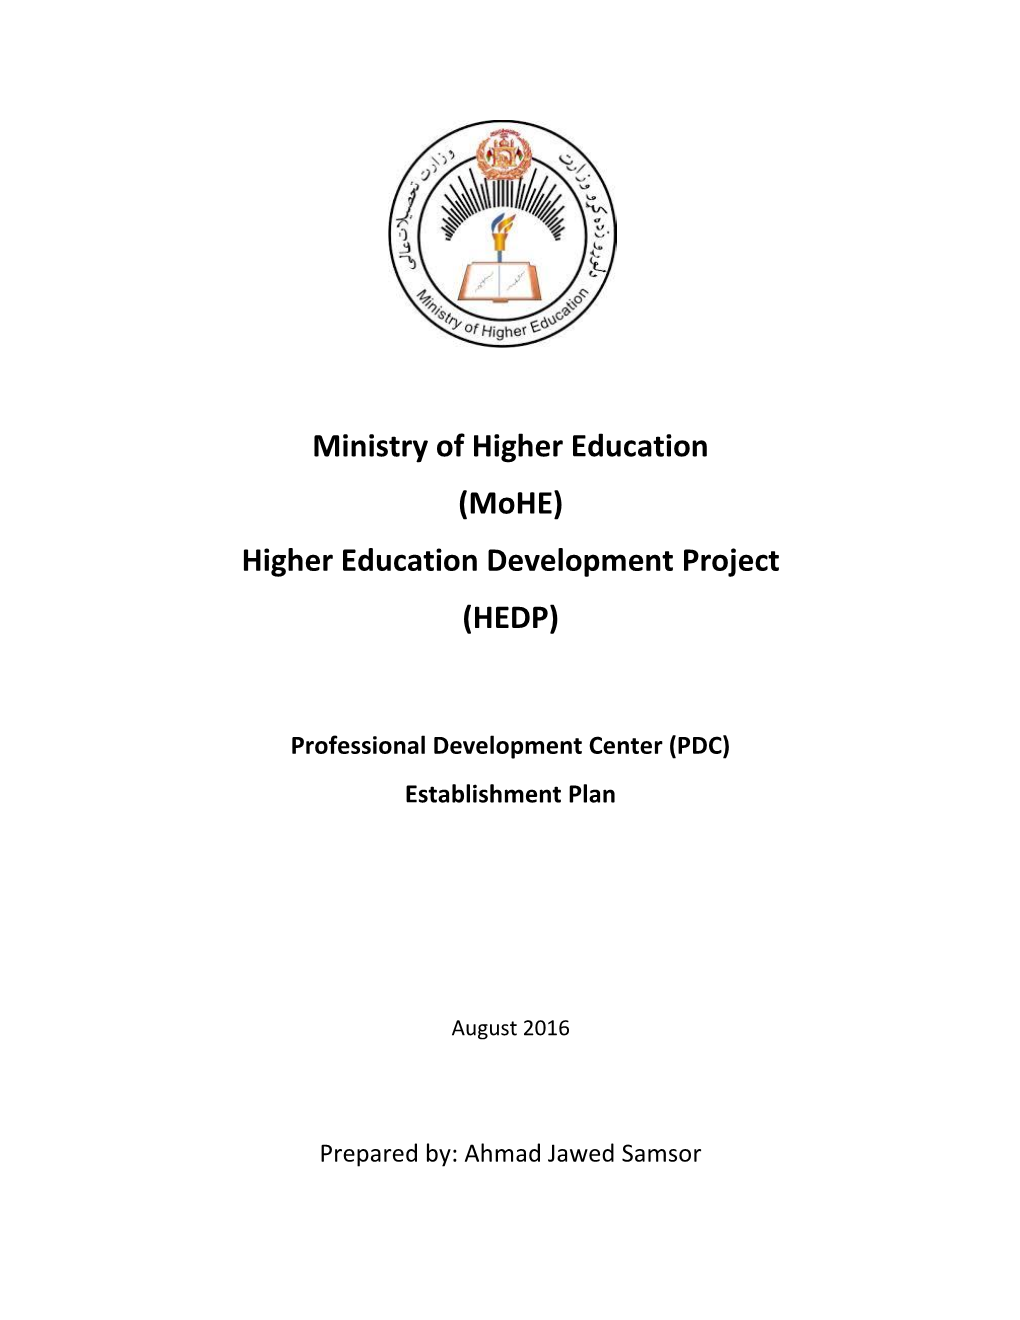 Professional Development Center (PDC) Establishment Plan